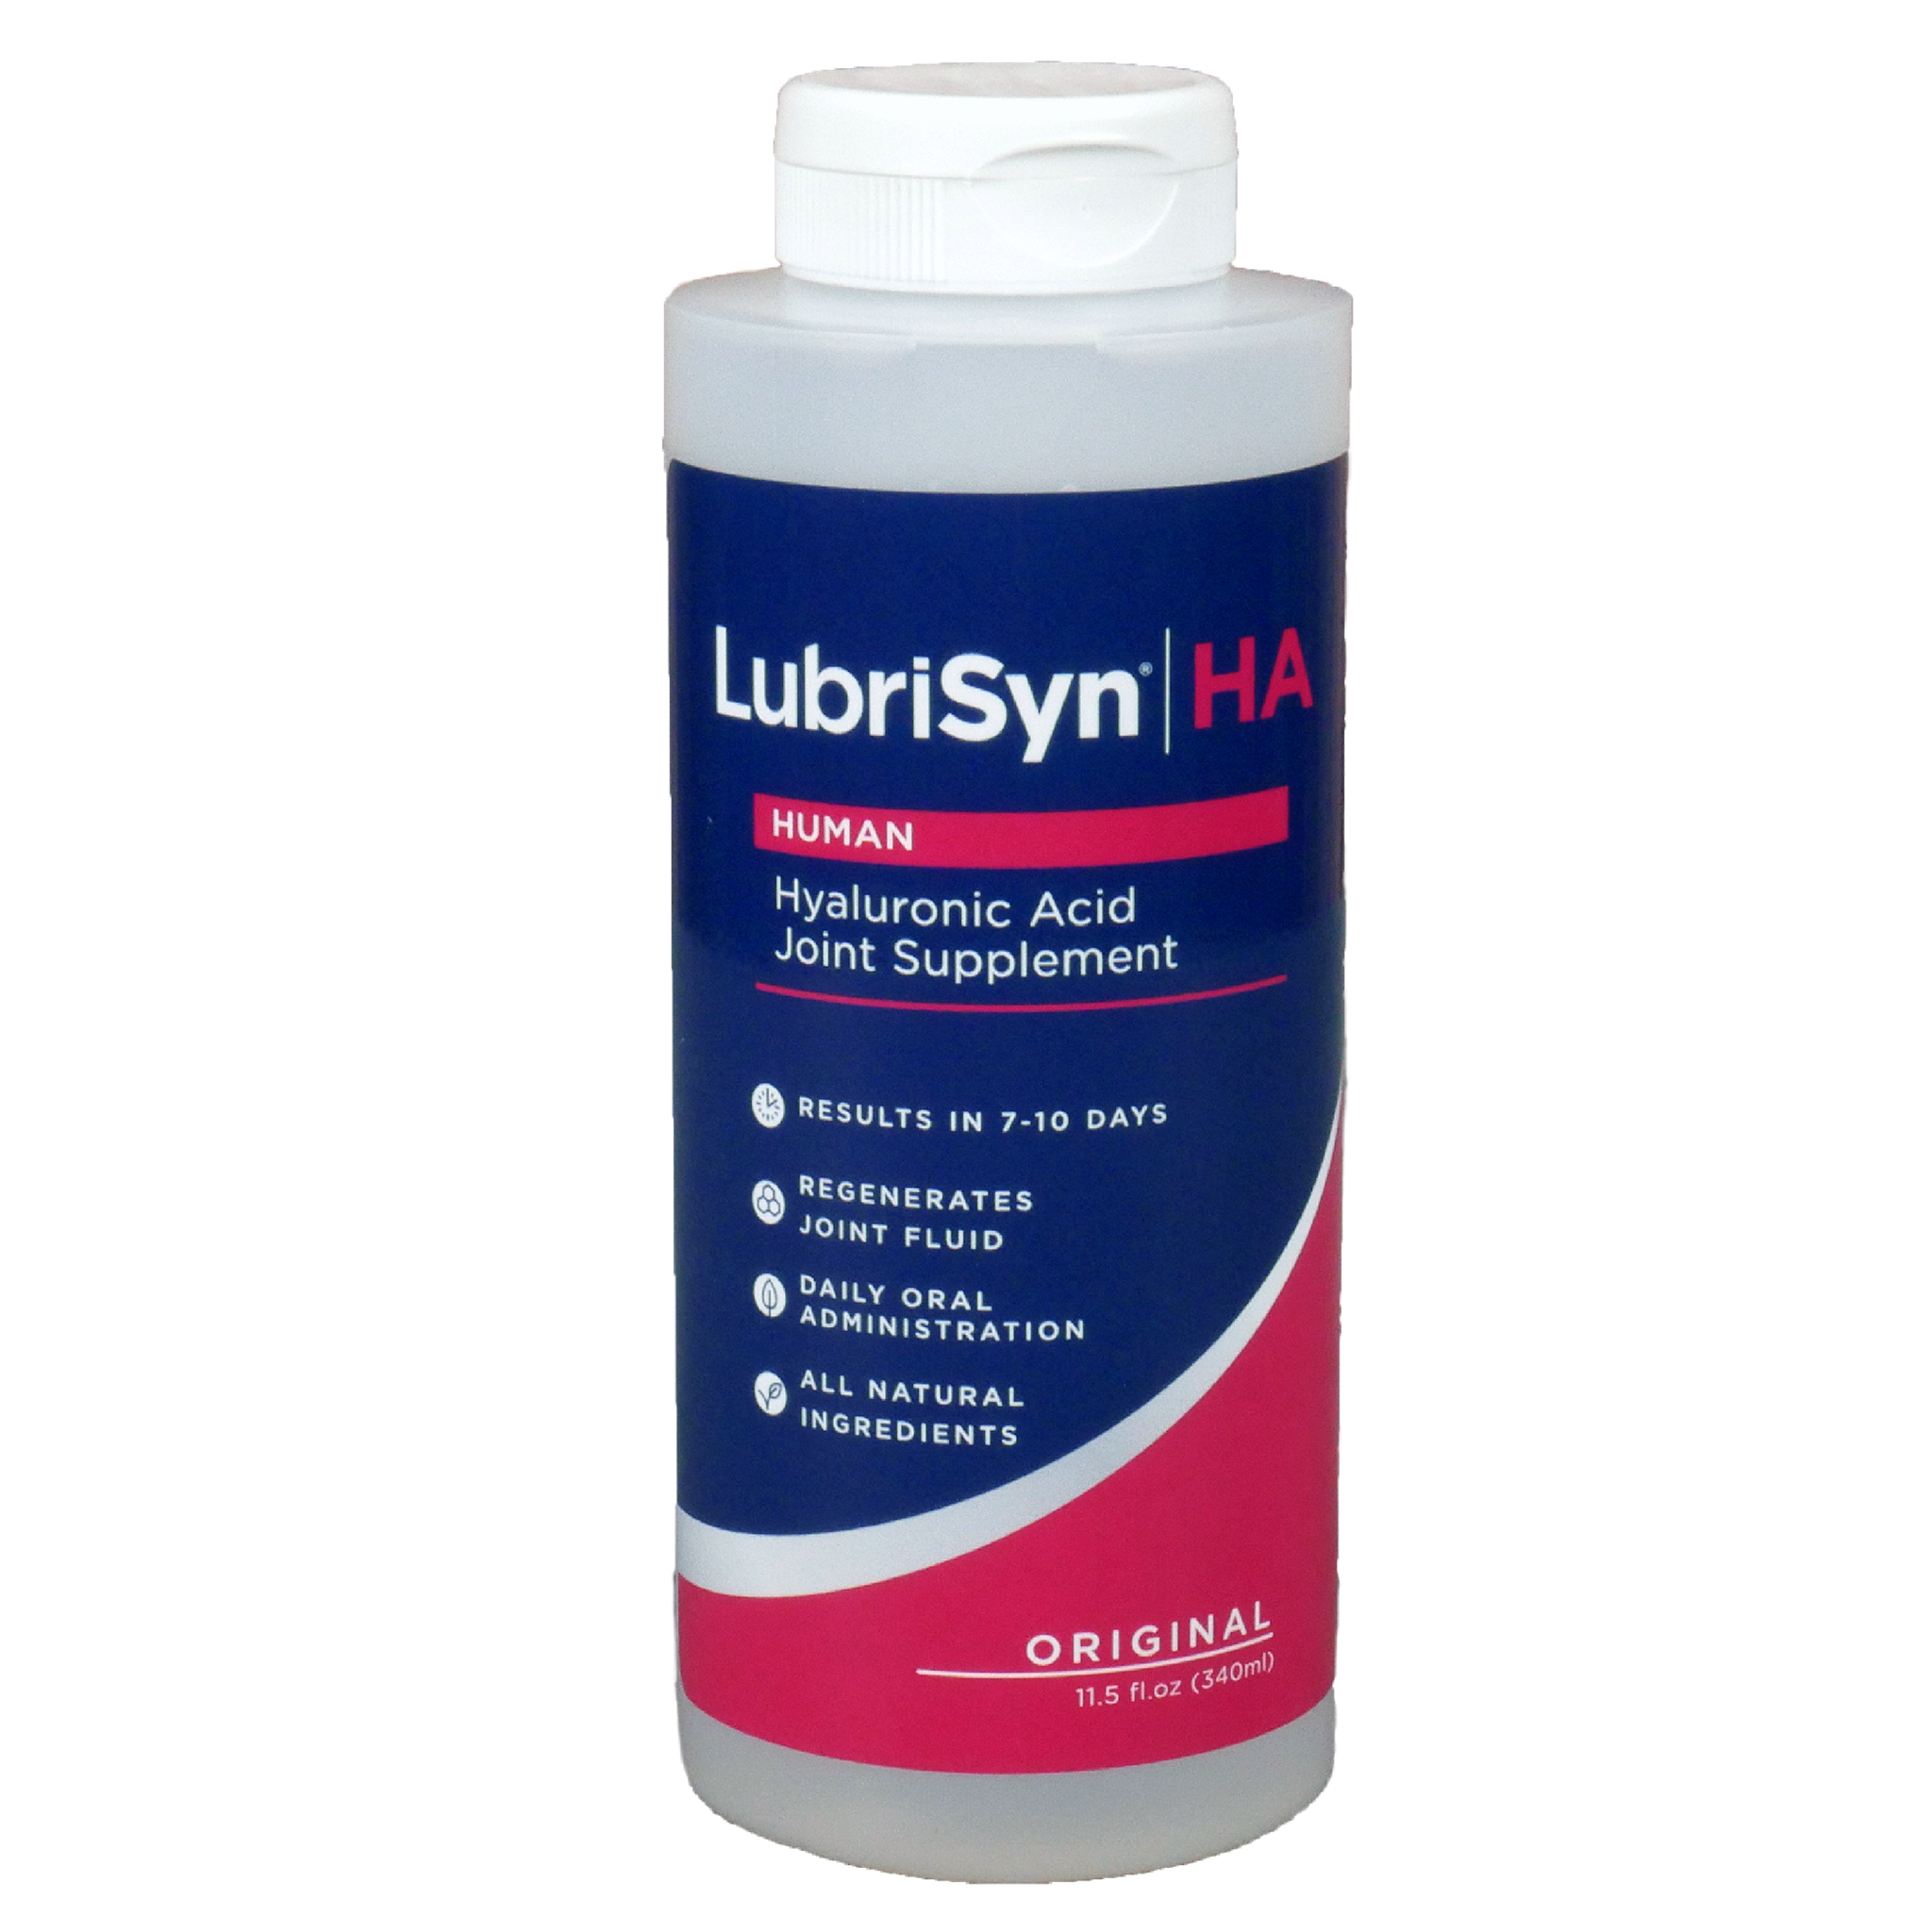 LubriSyn HA human original flavor one month supply.